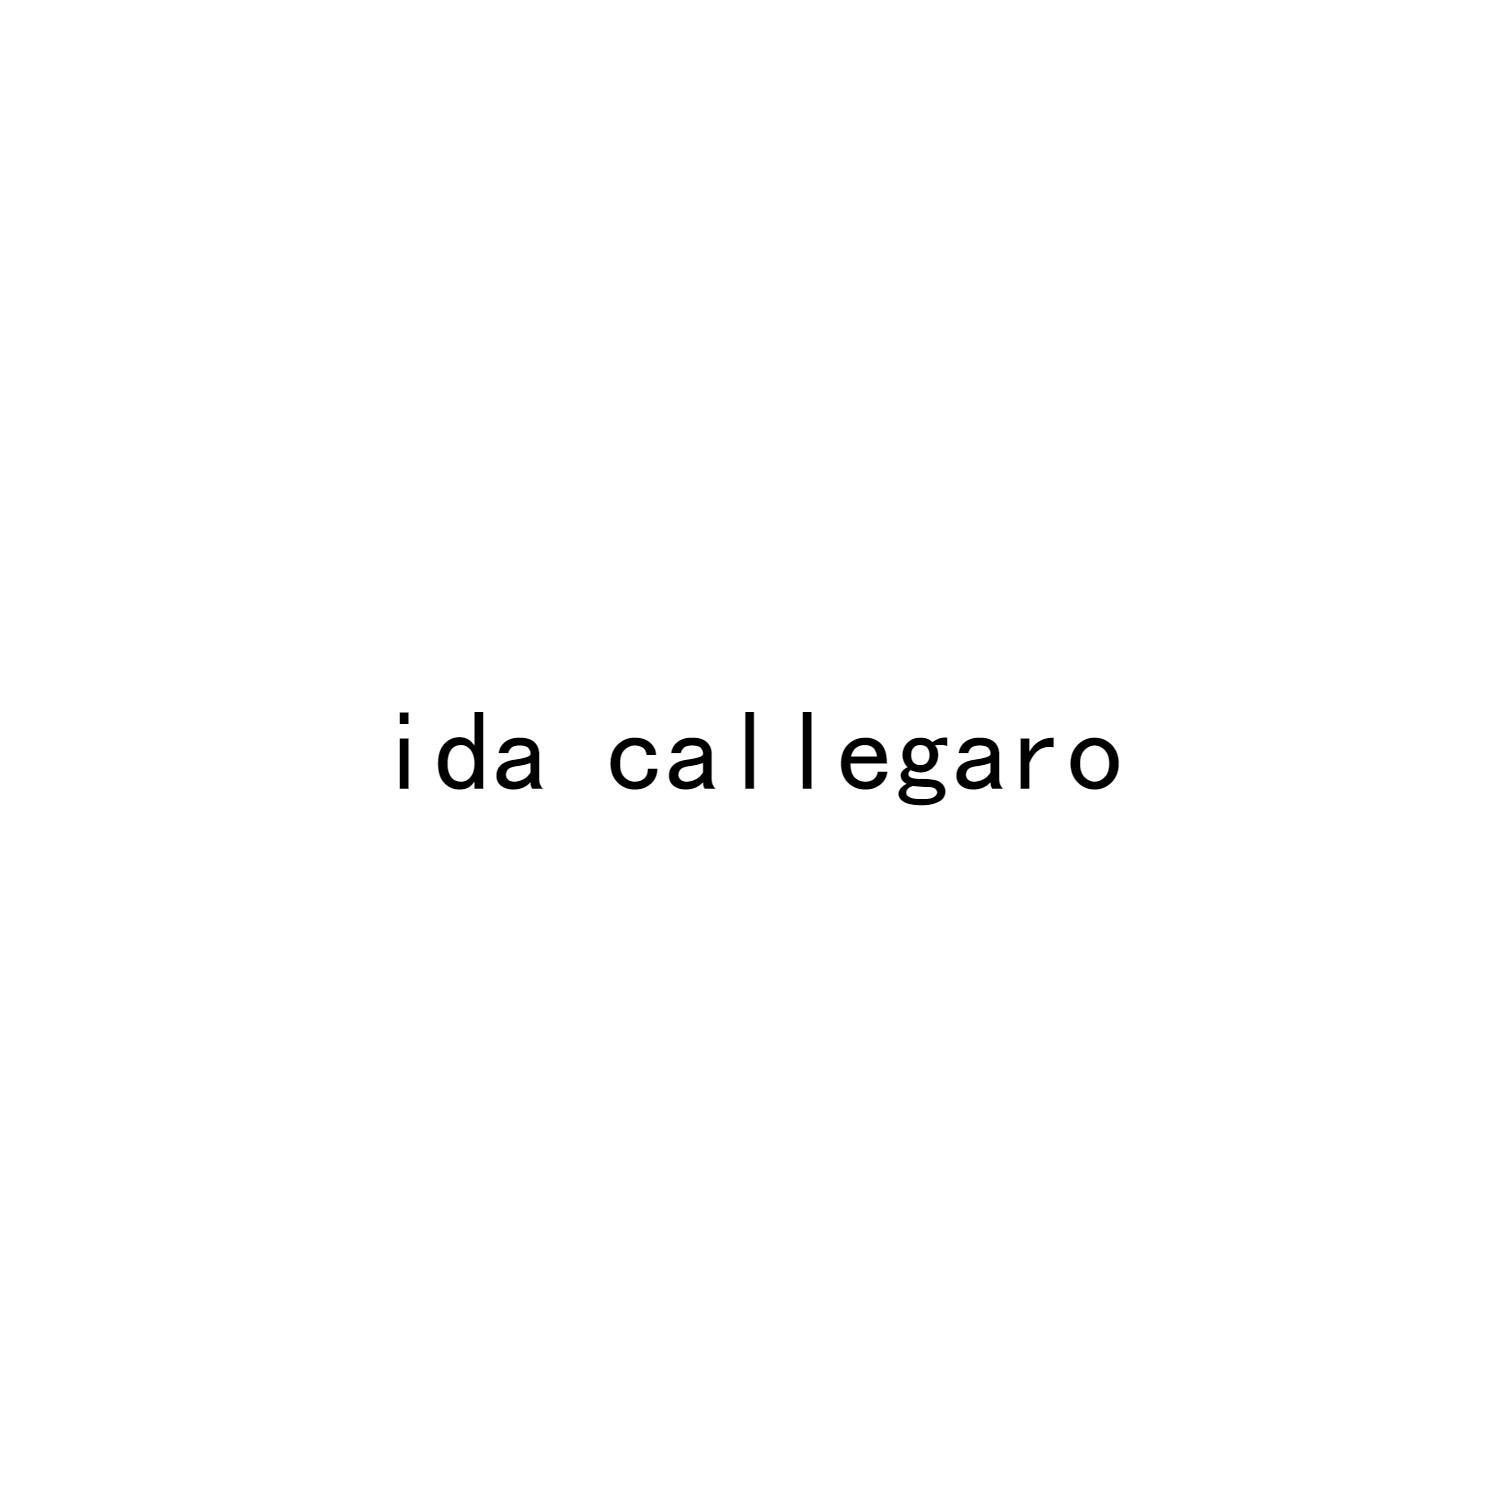 IDA CALLEGARO商标转让